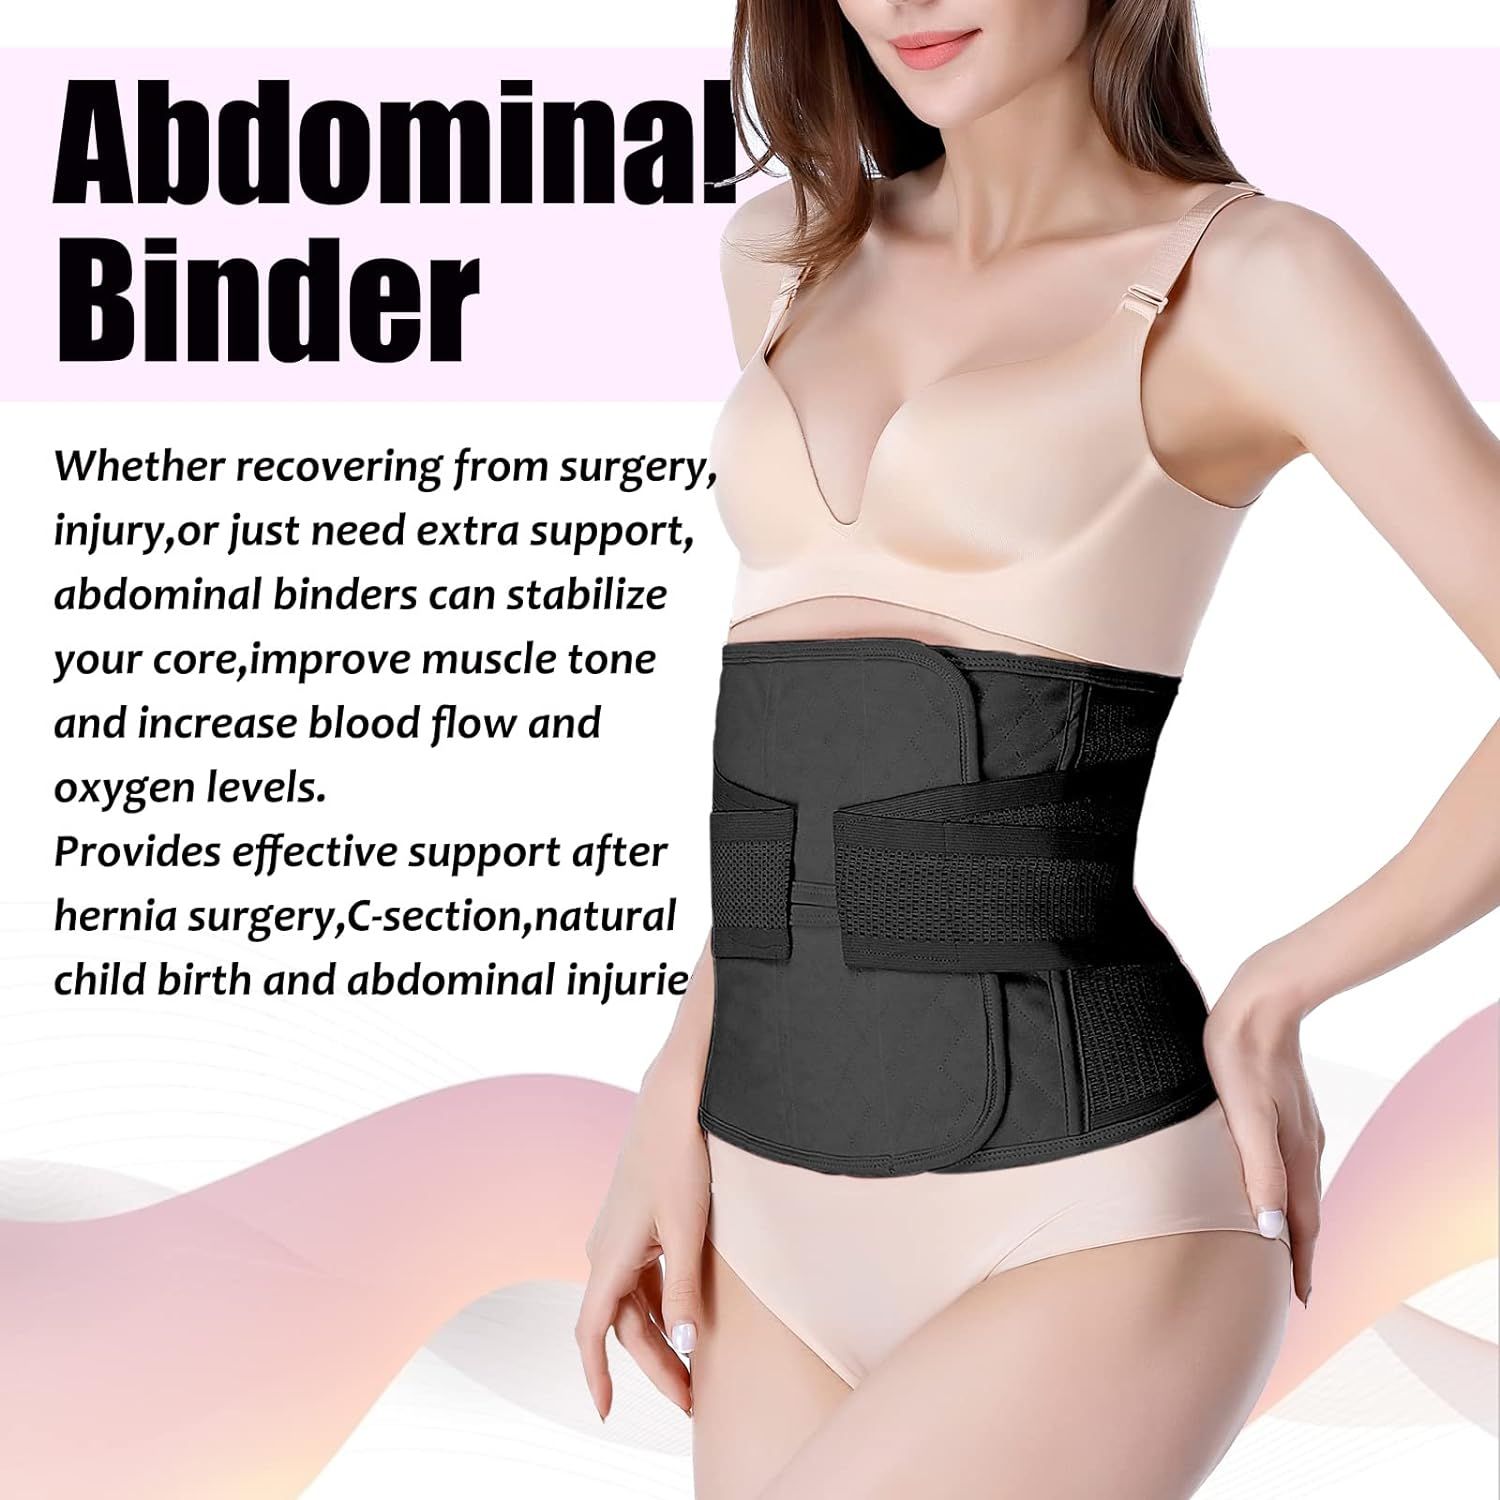 Postpartum Belly Band & Abdominal Binder Post Surgery Compression